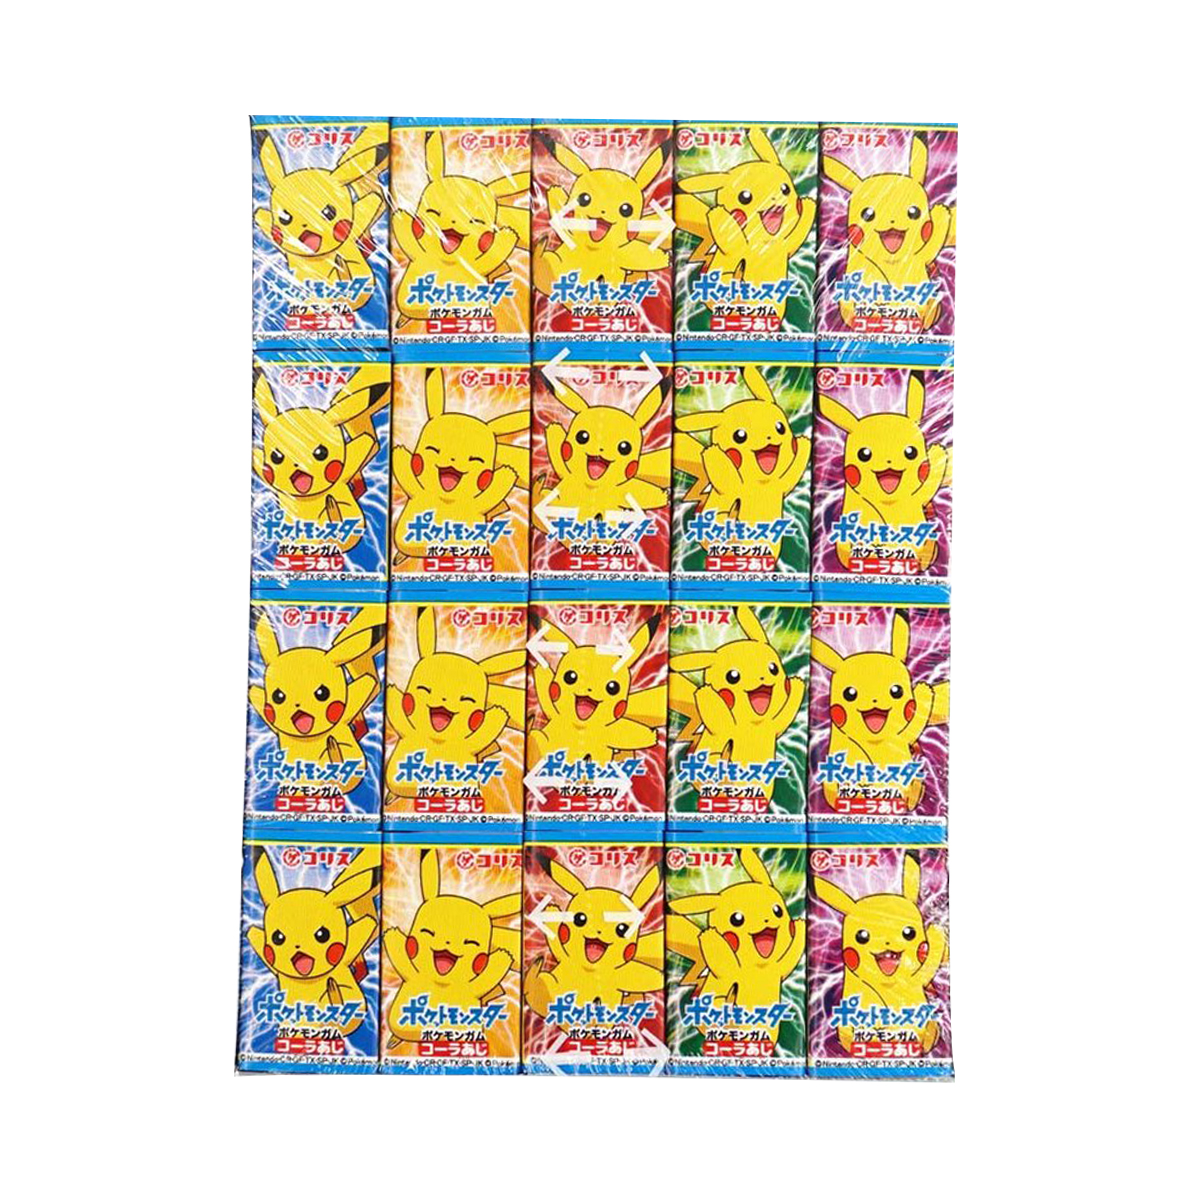 Caixa de Chiclete Japonês Pokémon Pikachu Sabor Cola - 60 unidades